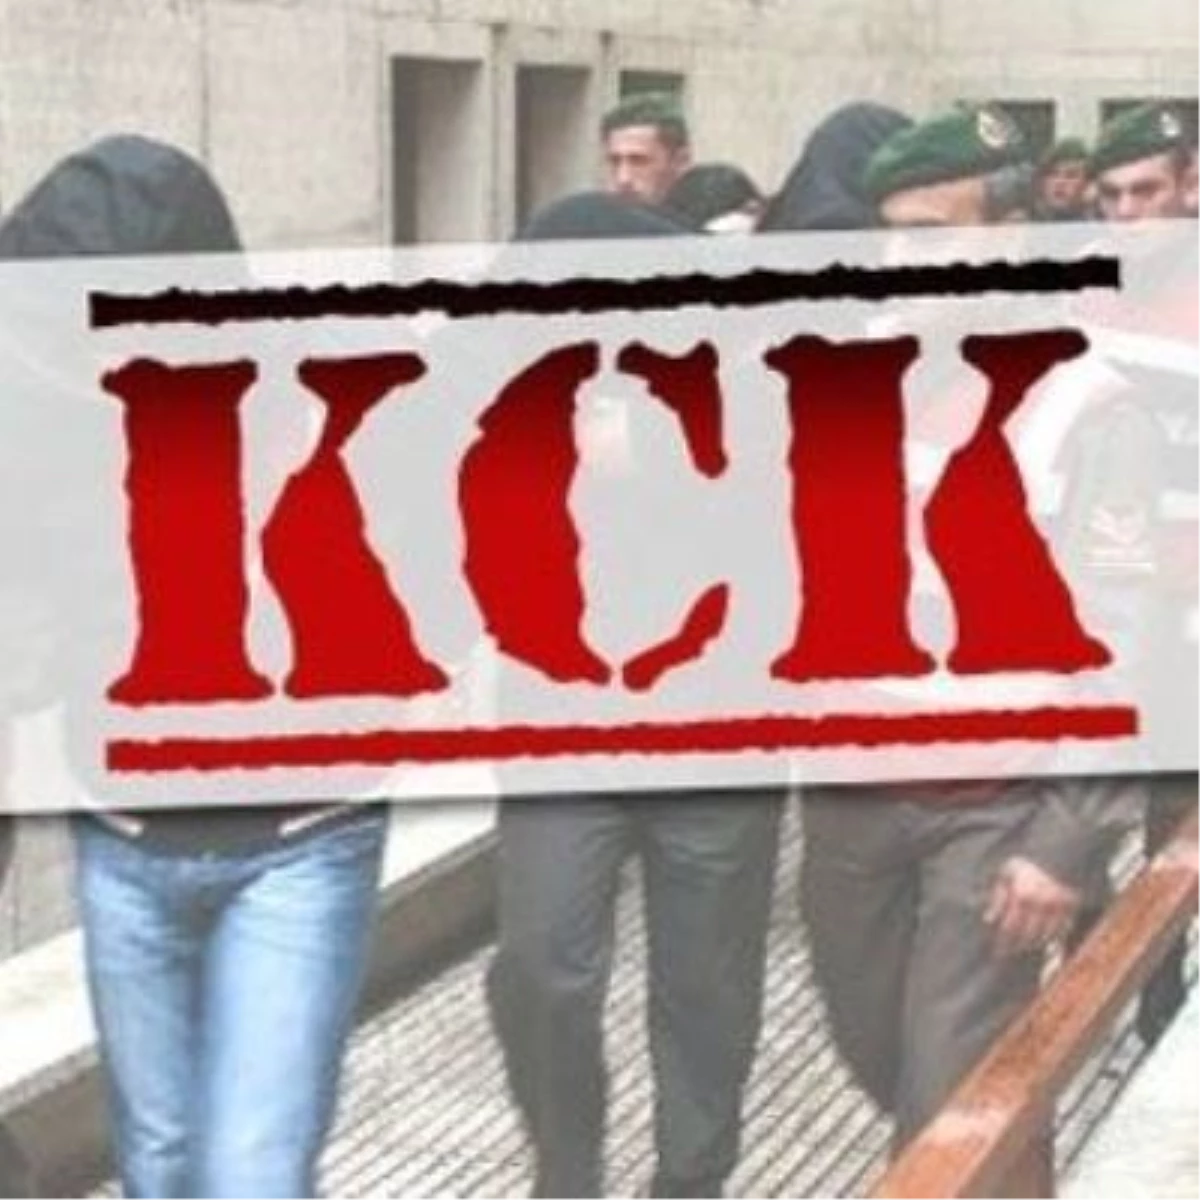 Tunceli Kck Davasında Ceza Yağdı